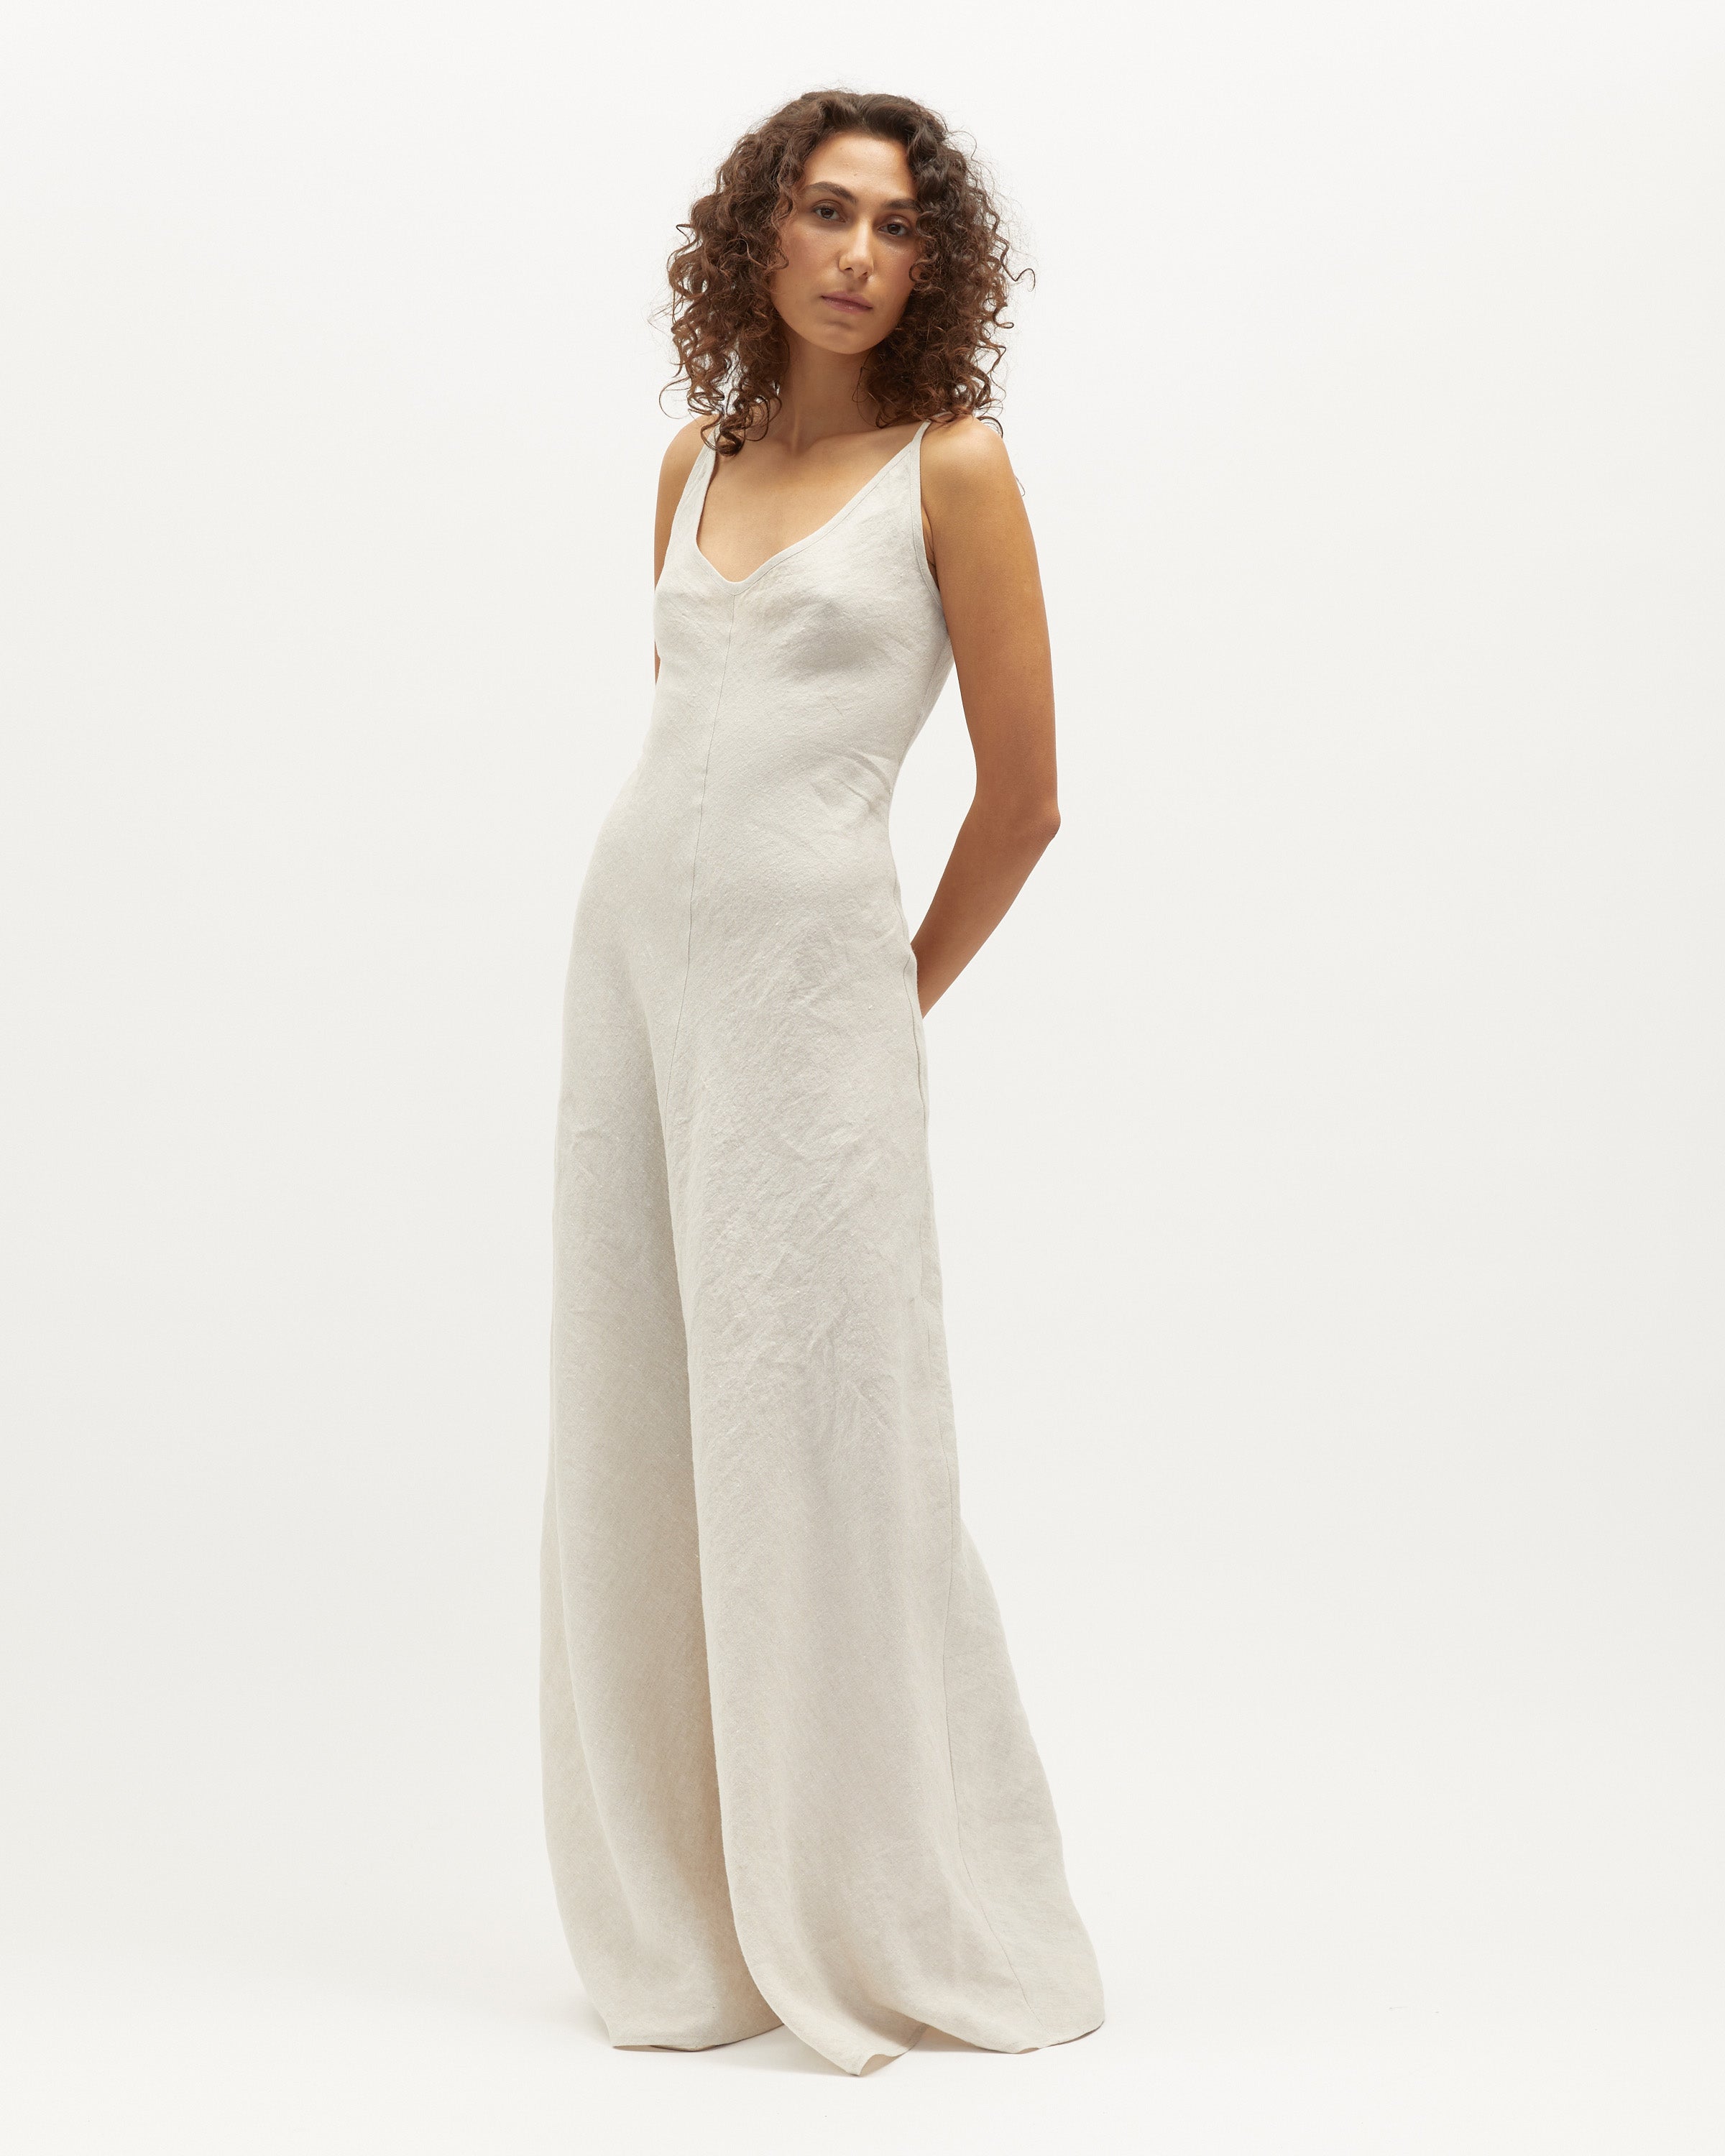 Sloane Dress | Sand Washed Linen $360